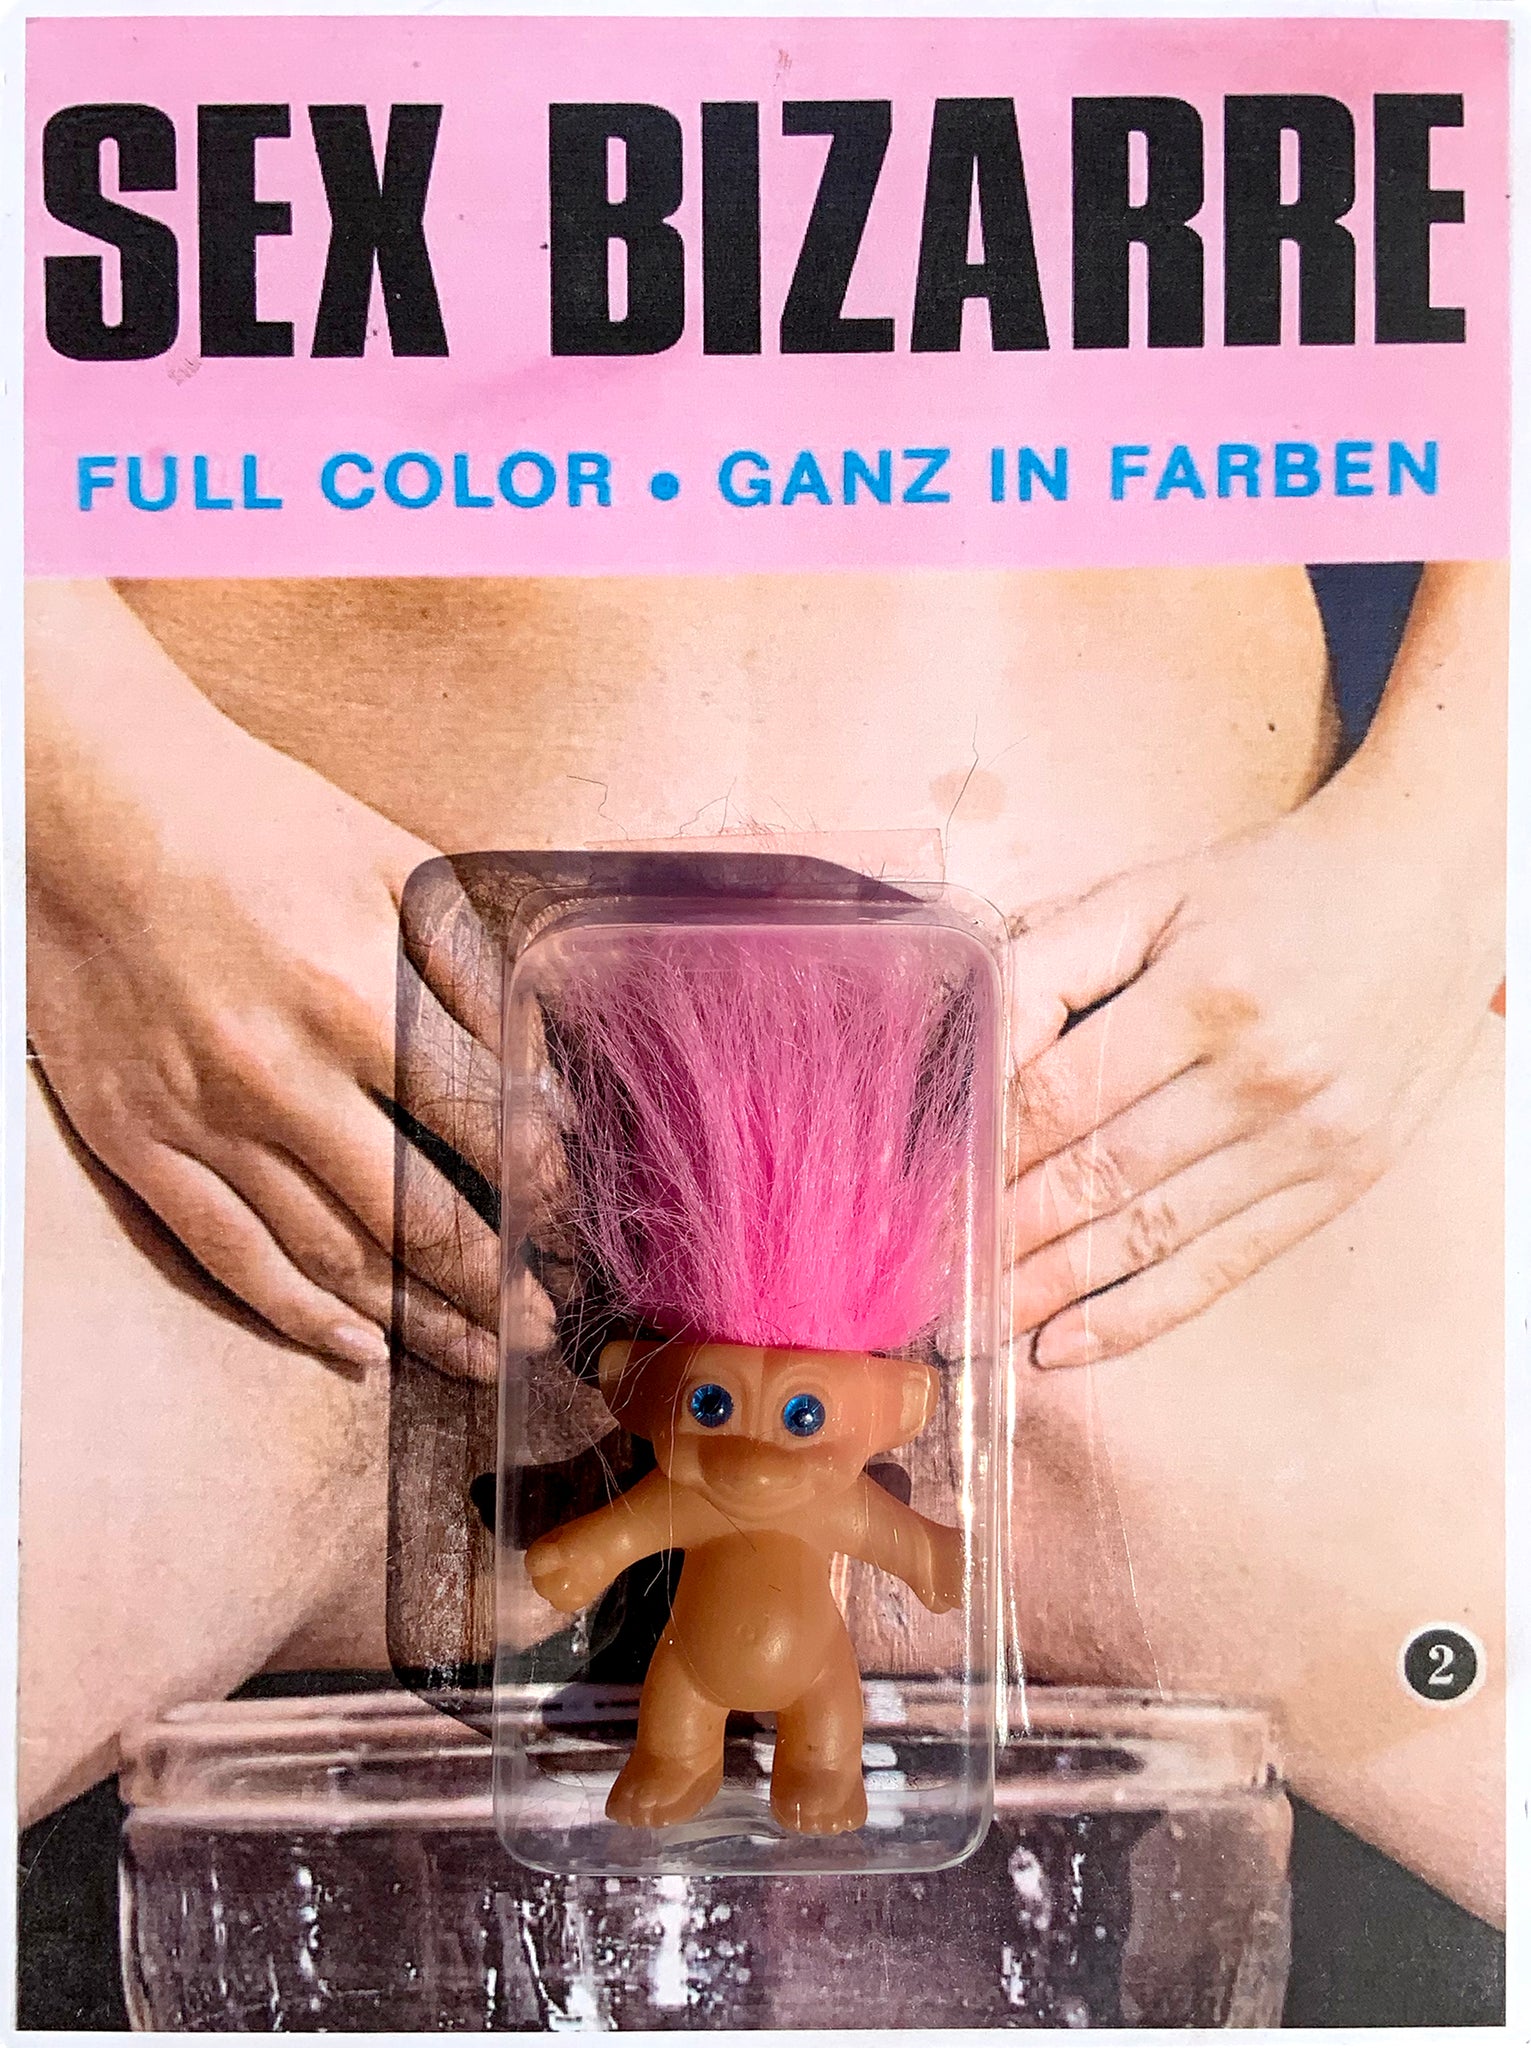 AEQEA 'Bizarre Sex' authentic retro Troll Doll figure custom carded adulterated vintage magazine print toy art